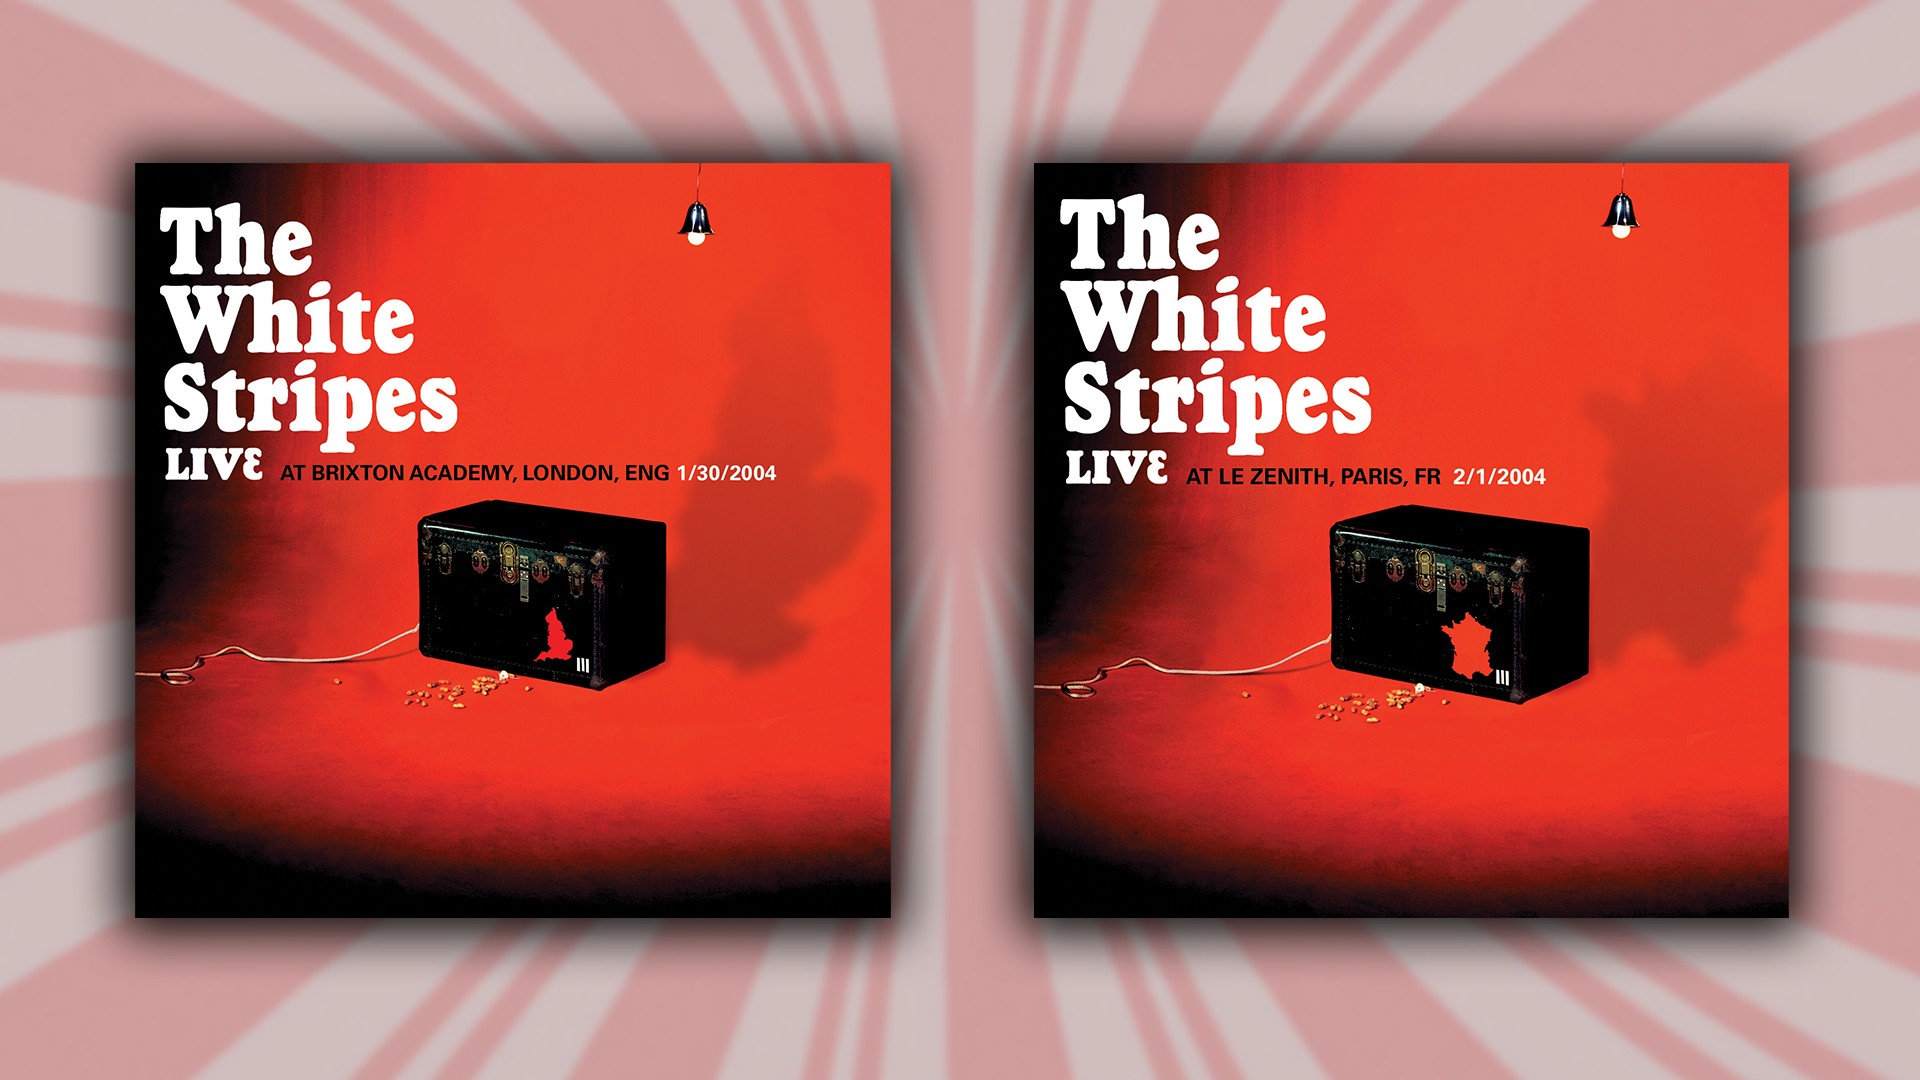 The White Stripes: January 2004 London, UK and Paris, FR